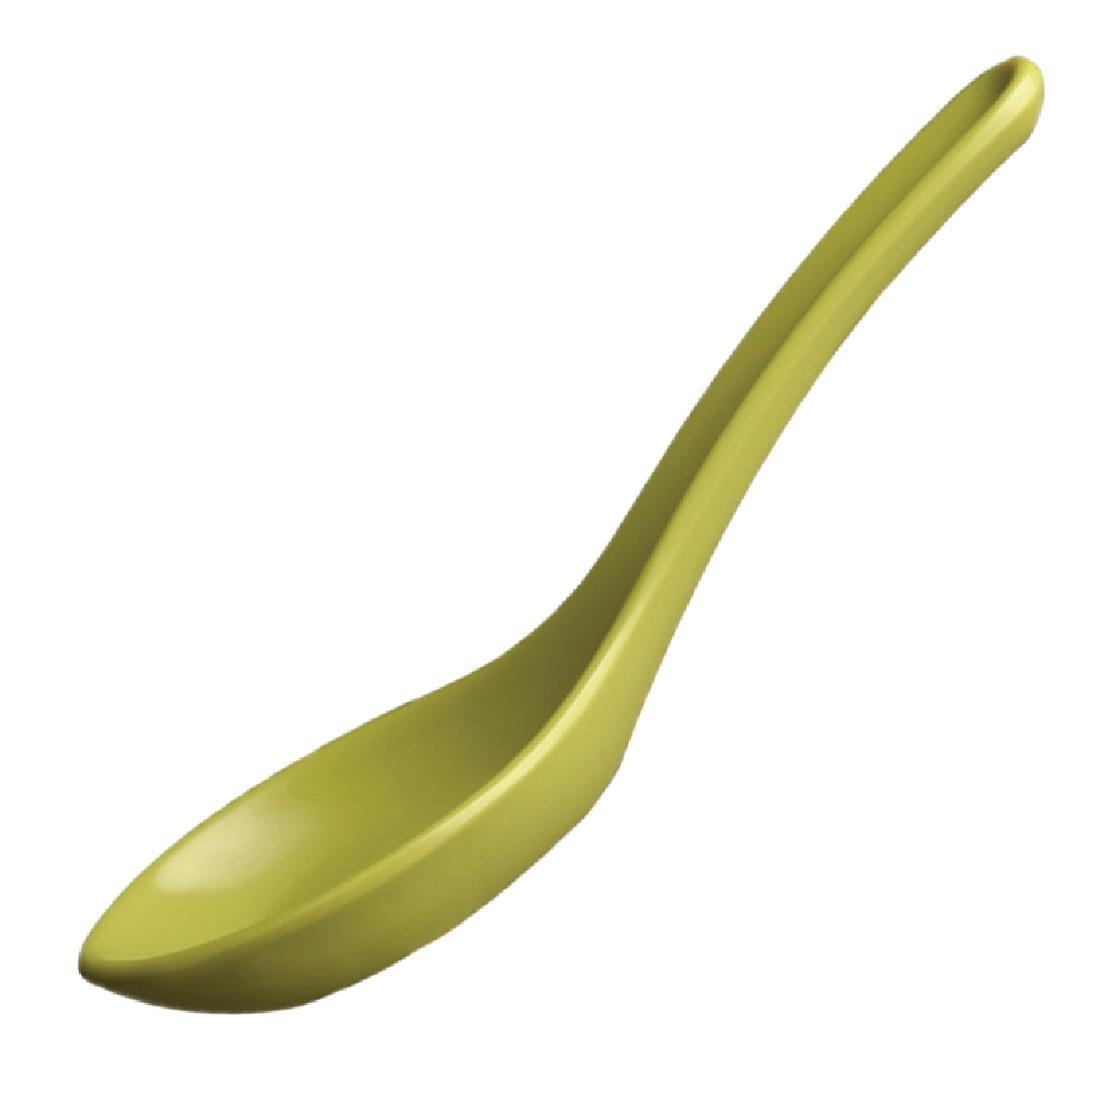 APS Melamine Spoon Green - Each - GL614 - 1